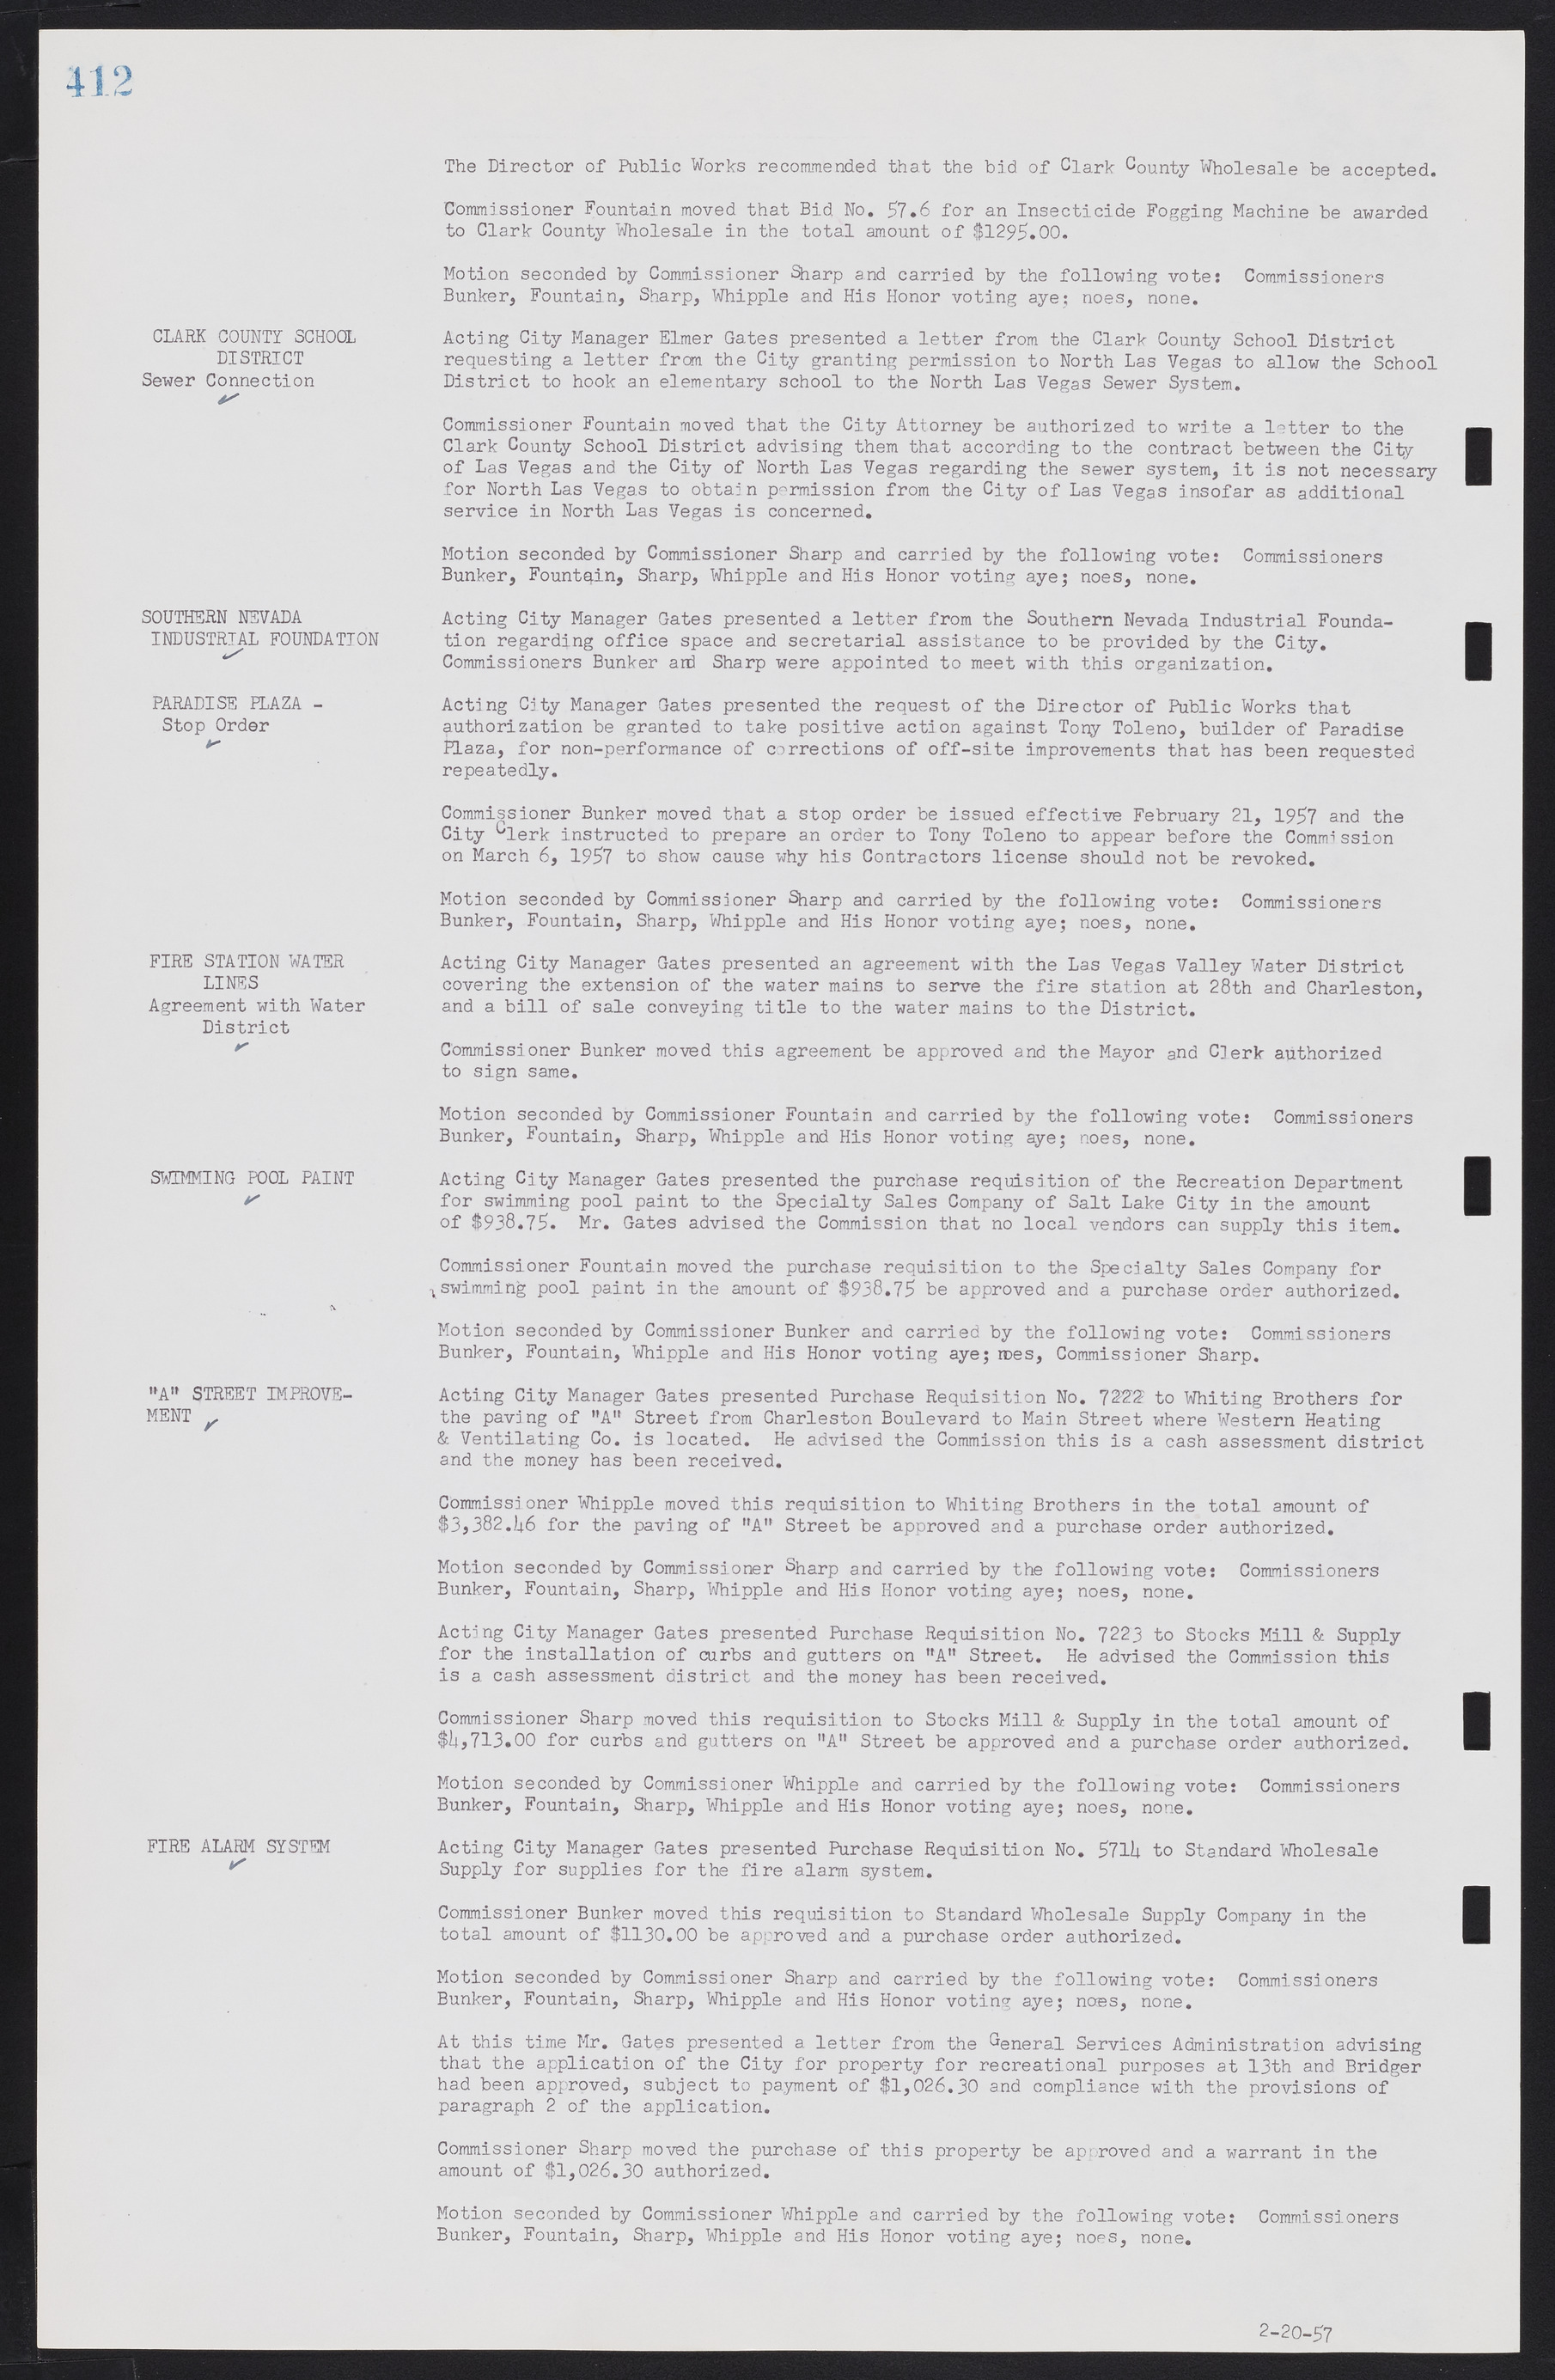 Las Vegas City Commission Minutes, September 21, 1955 to November 20, 1957, lvc000010-432